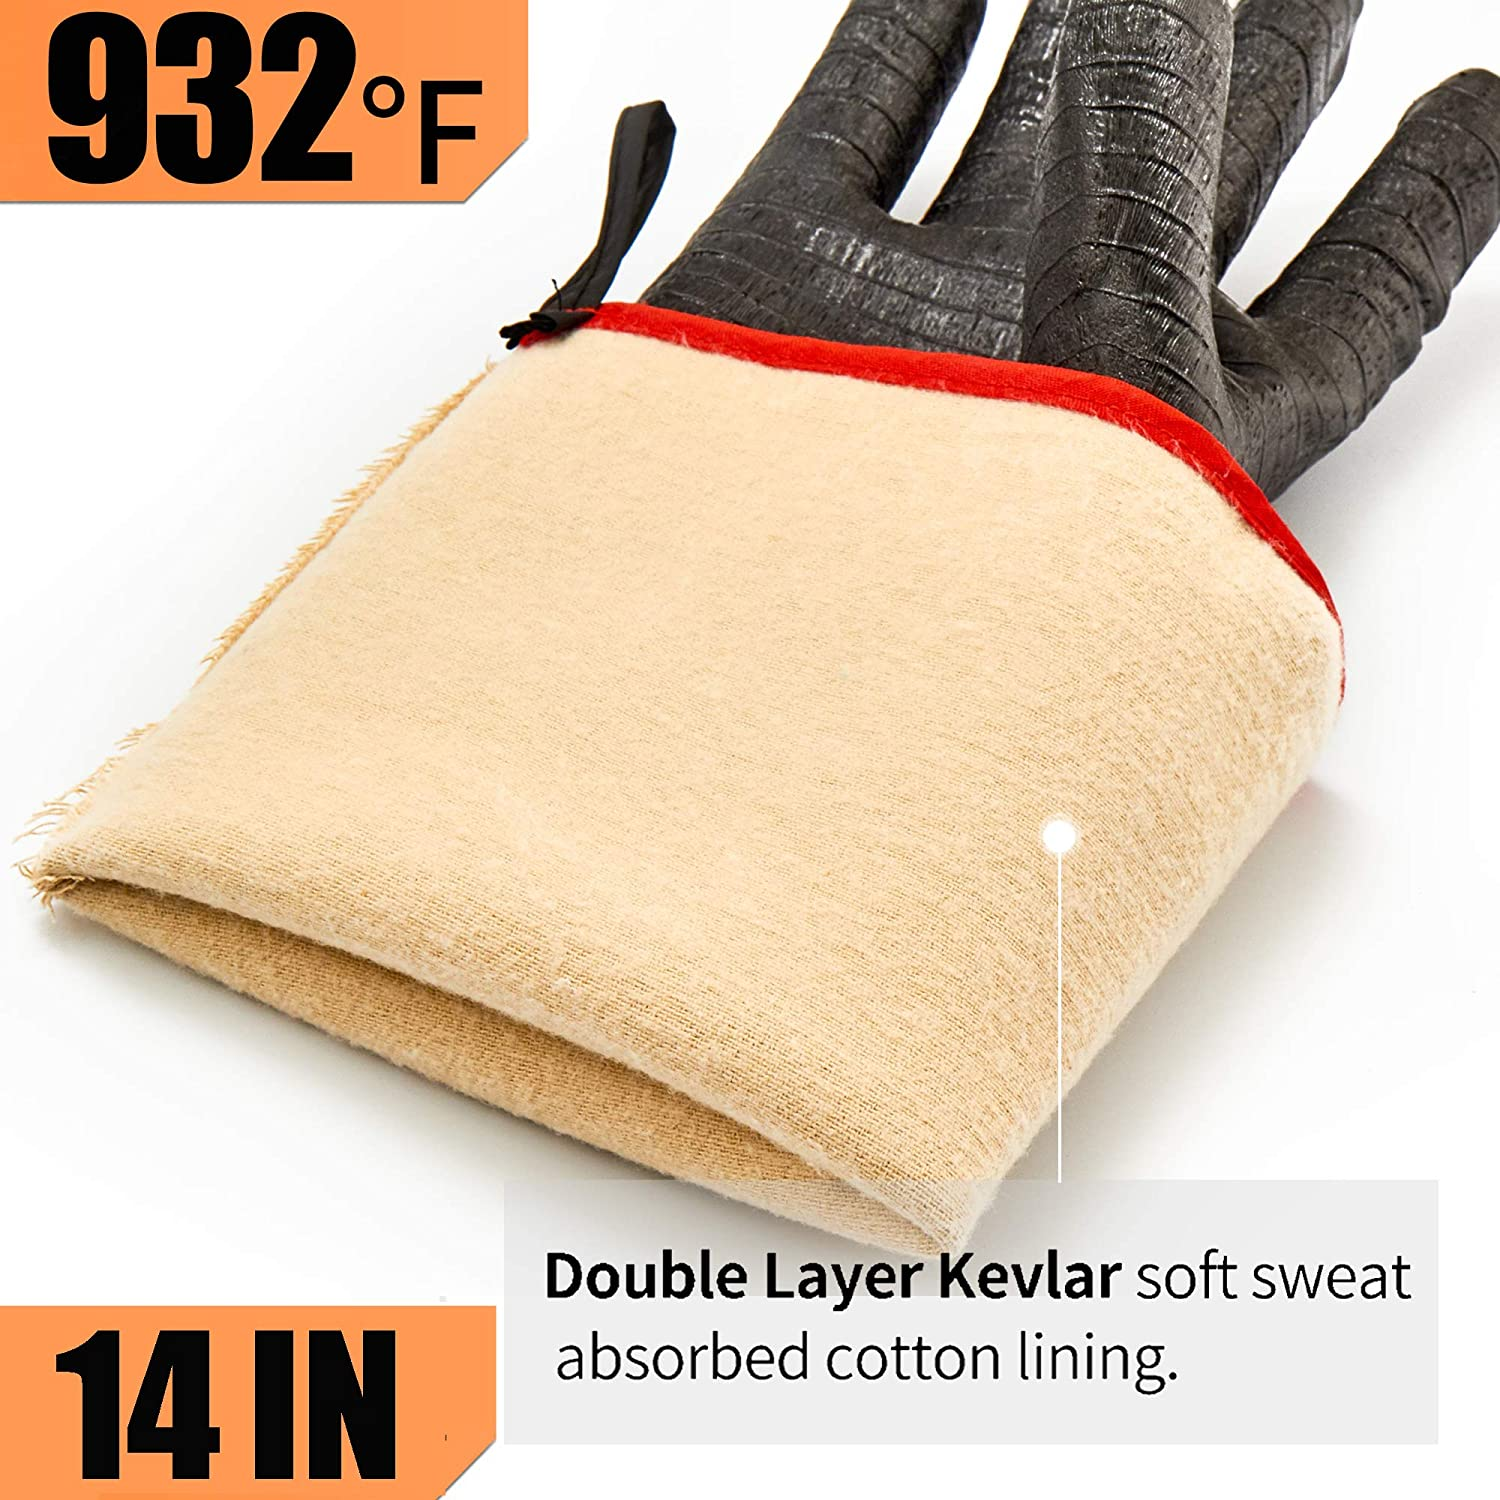 Heat Resistant Gloves - EN407 Certified 932°F Oven Gloves, Cut-Resistant  Grill Gloves, Cooking Gloves for BBQ, Grilling, Baking, Cutting, Welding